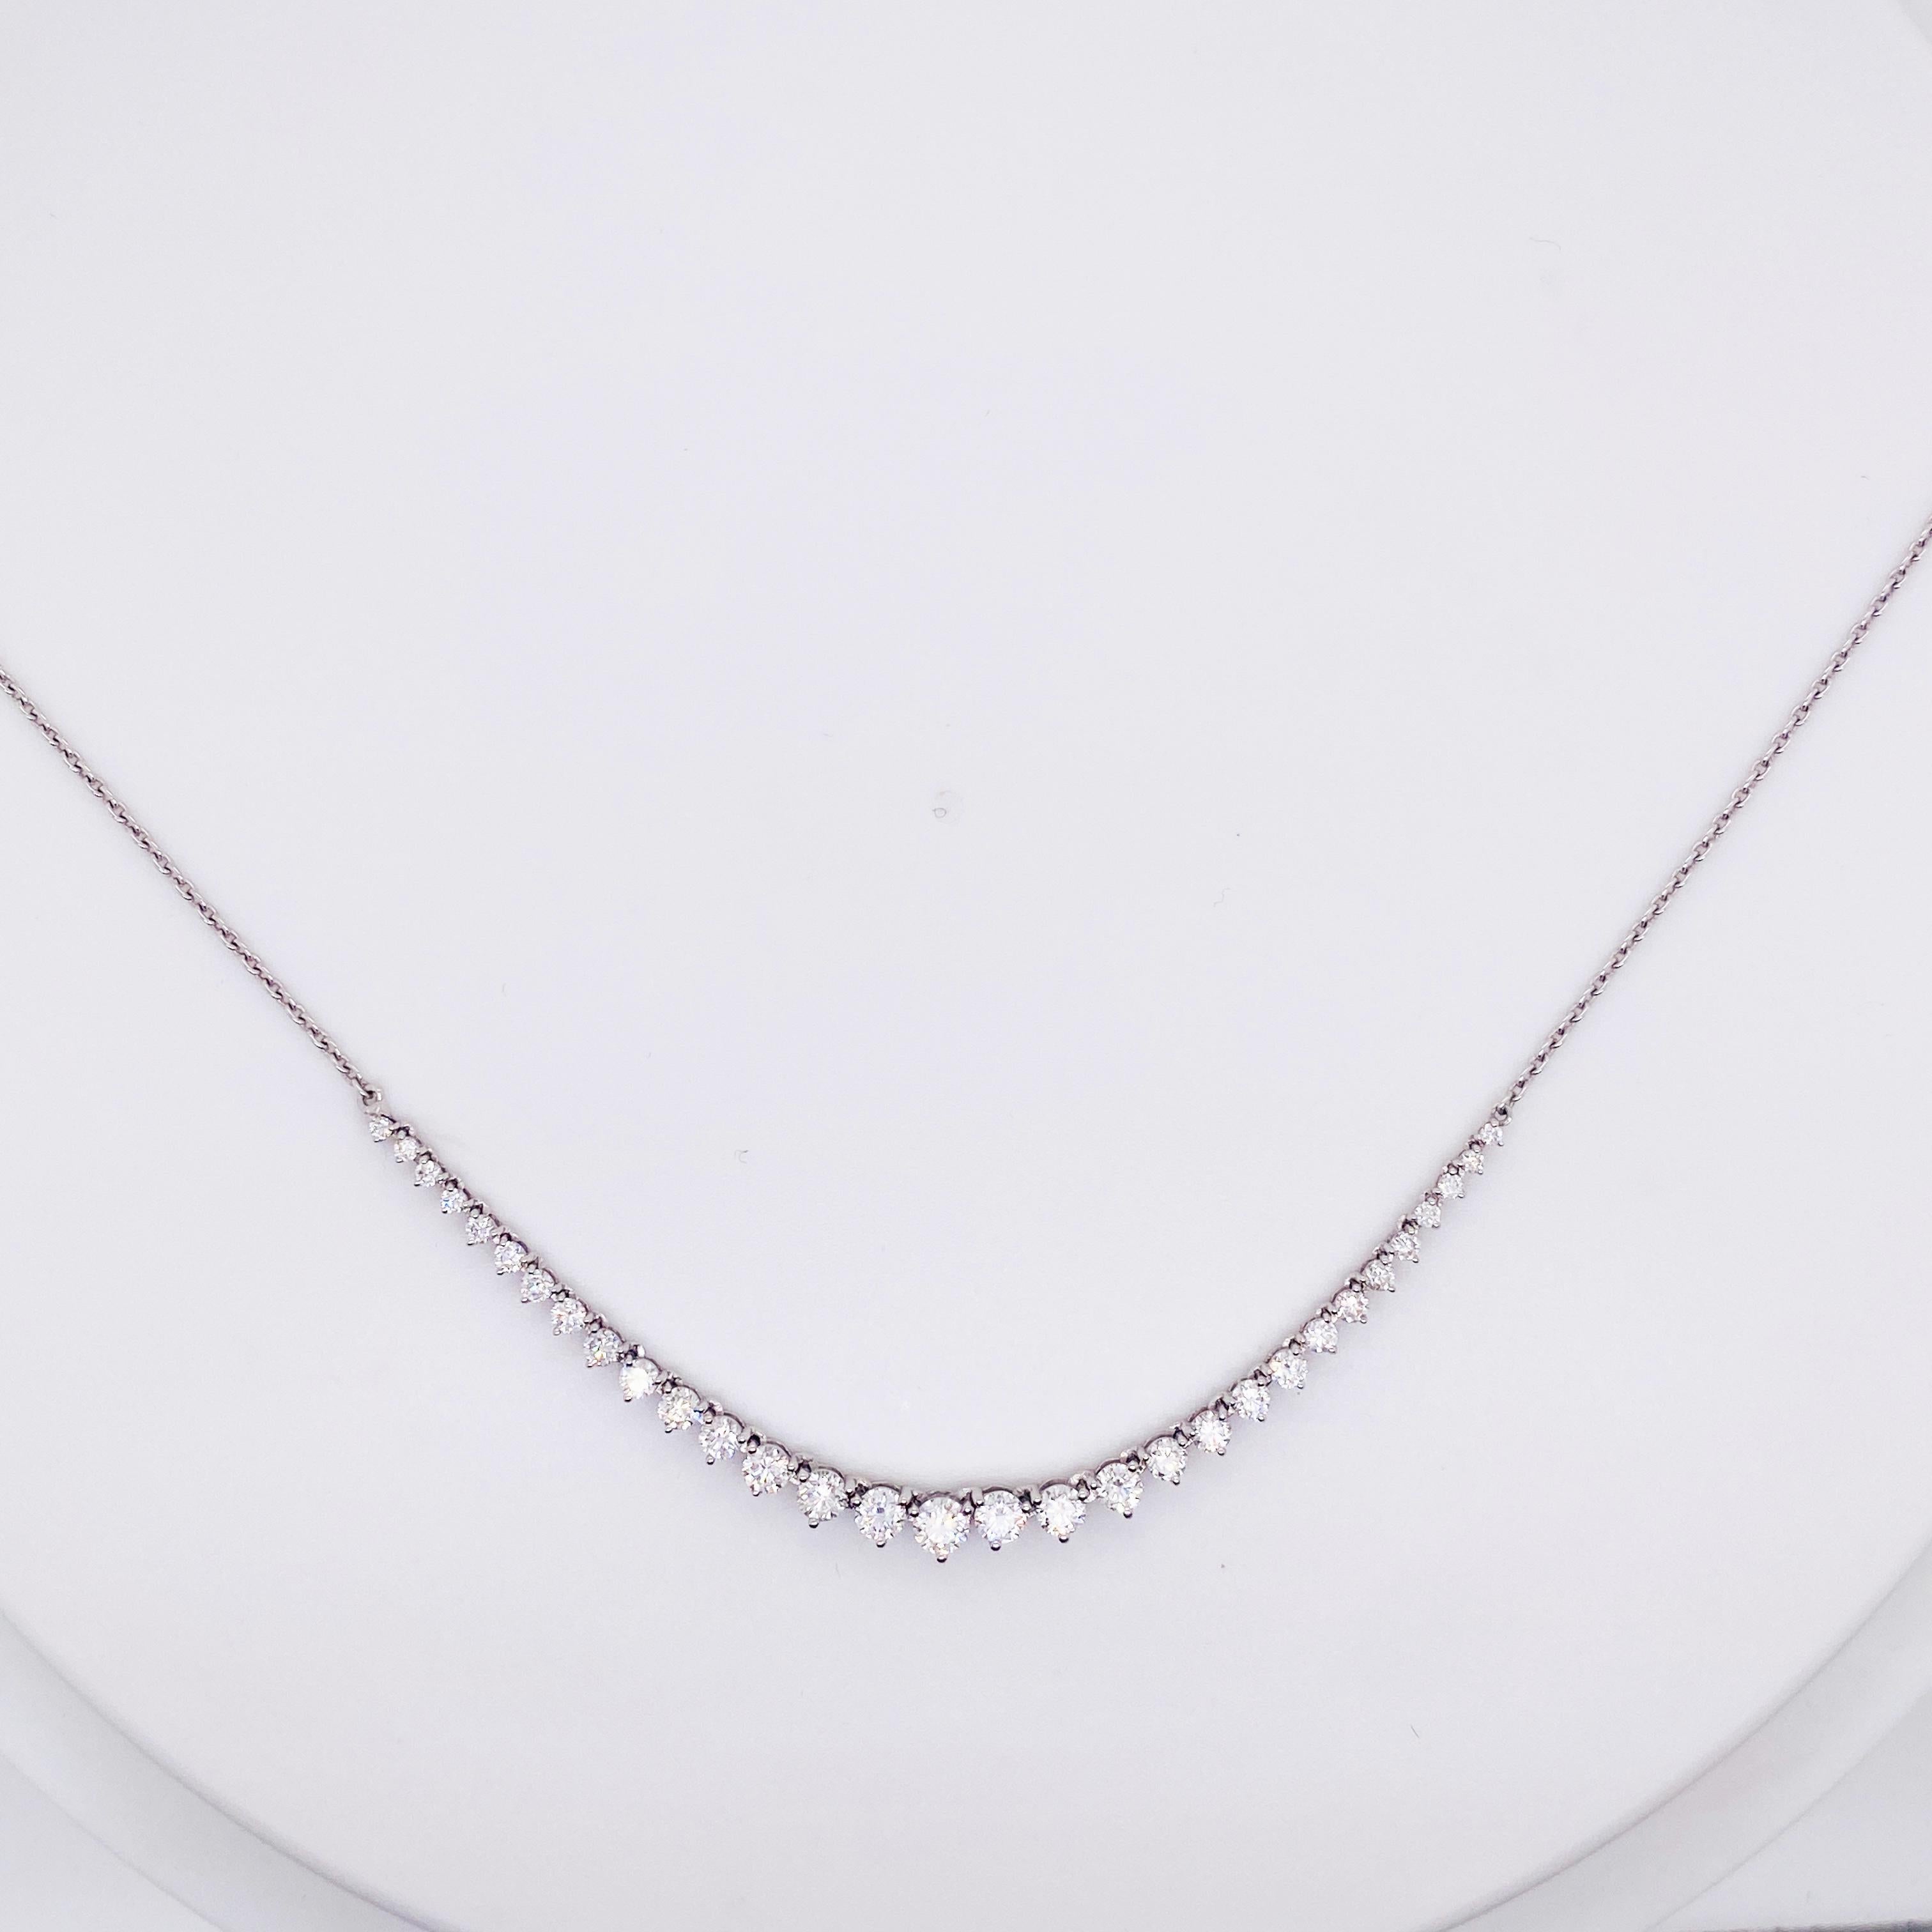 Mini-Riviera Tennis Necklace 1.62 Carats Graduated Diamonds in 14k White Gold For Sale 1